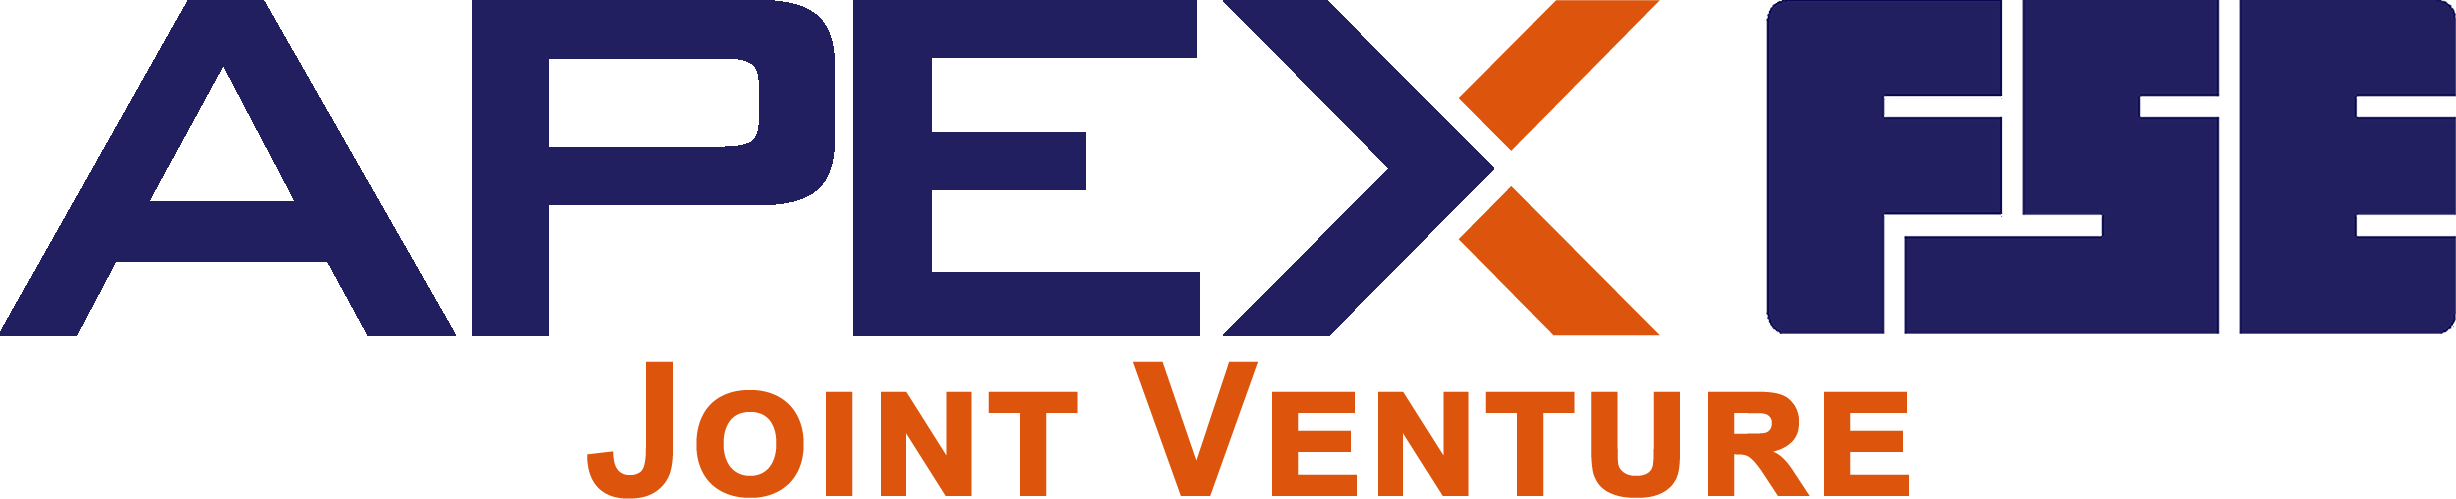 Apex FSE Joint Venture Logo